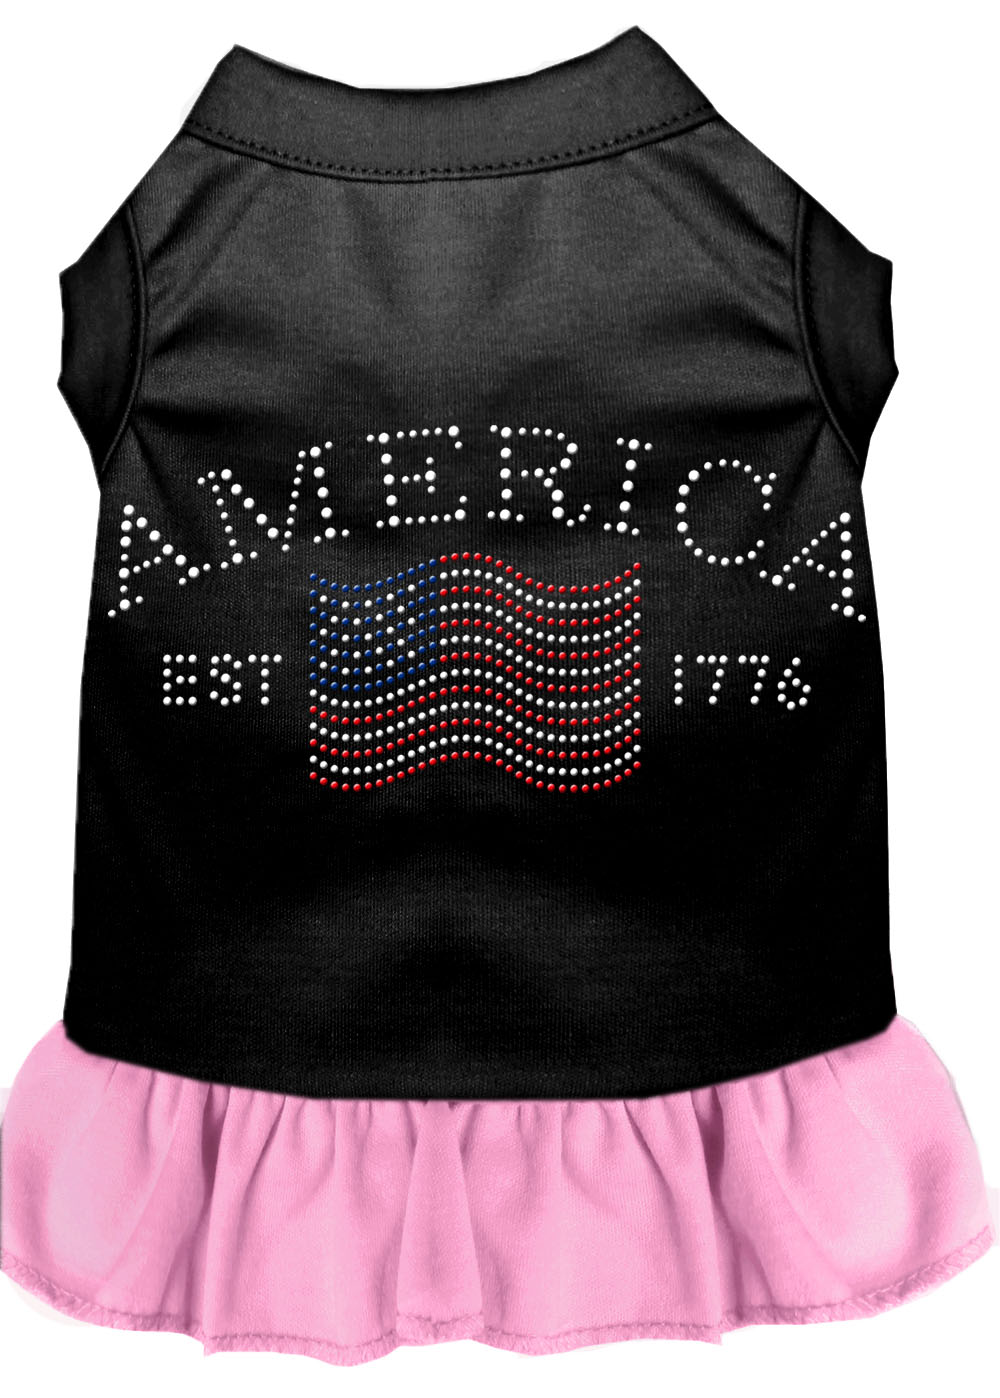 Classic America Rhinestone Dress Black with Light Pink Med